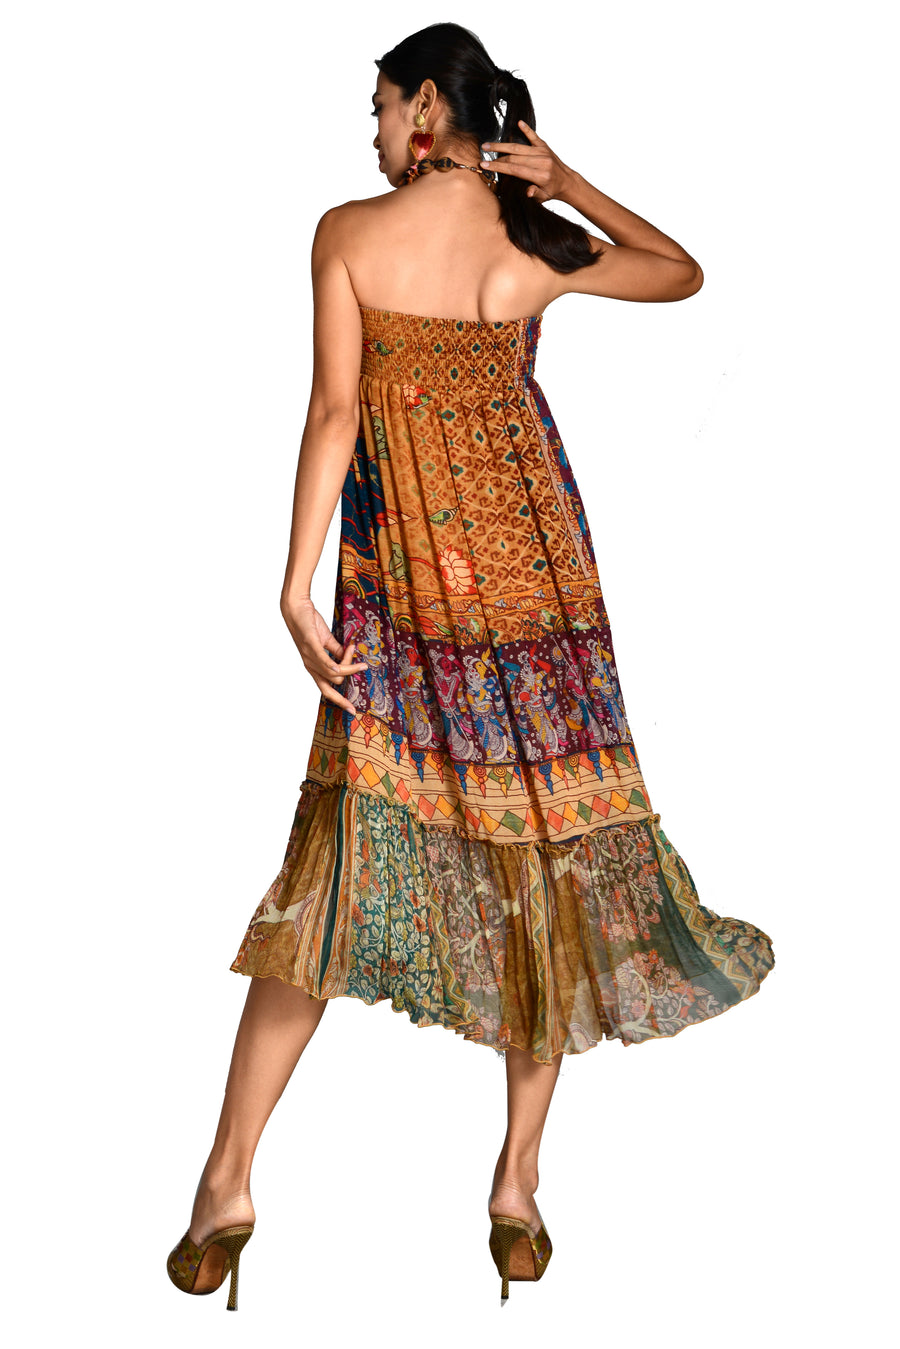 Clarence - Georgette Chiffon Digital Print Long Skirt (7269729468612)